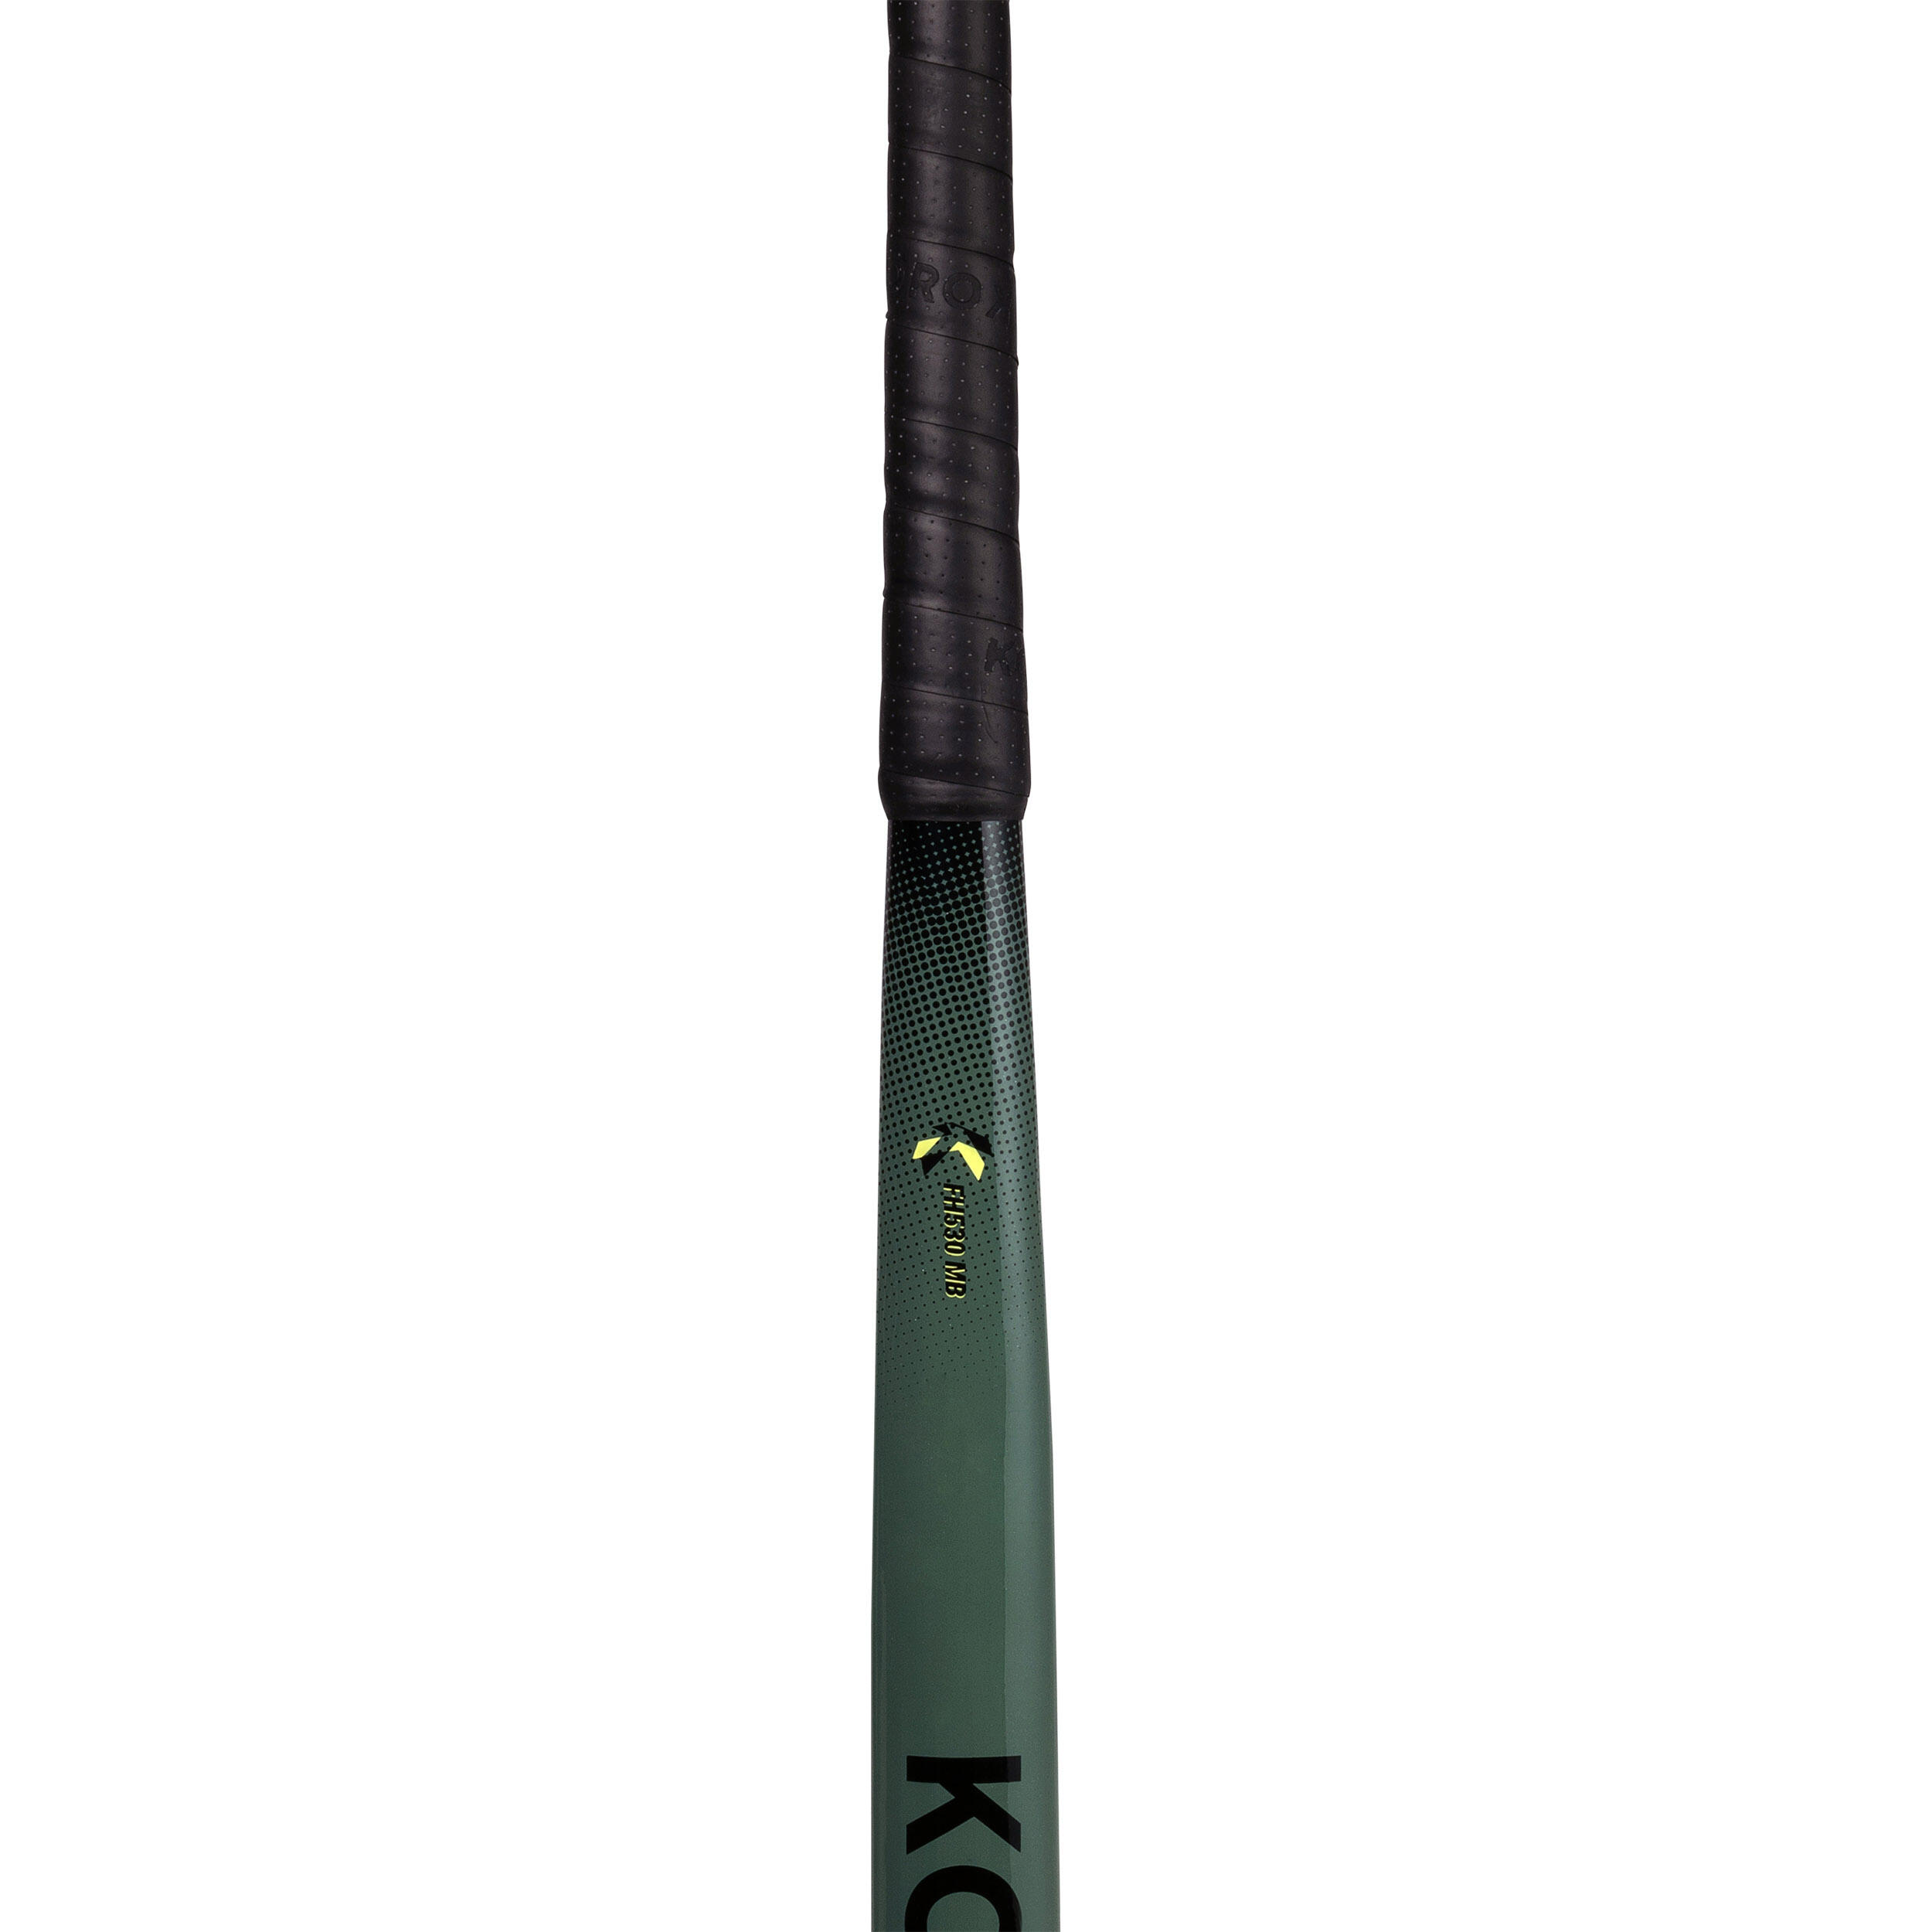 Adult Intermediate 30% Carbon Mid Bow Field Hockey Stick FH530 - Khaki/Black 10/12